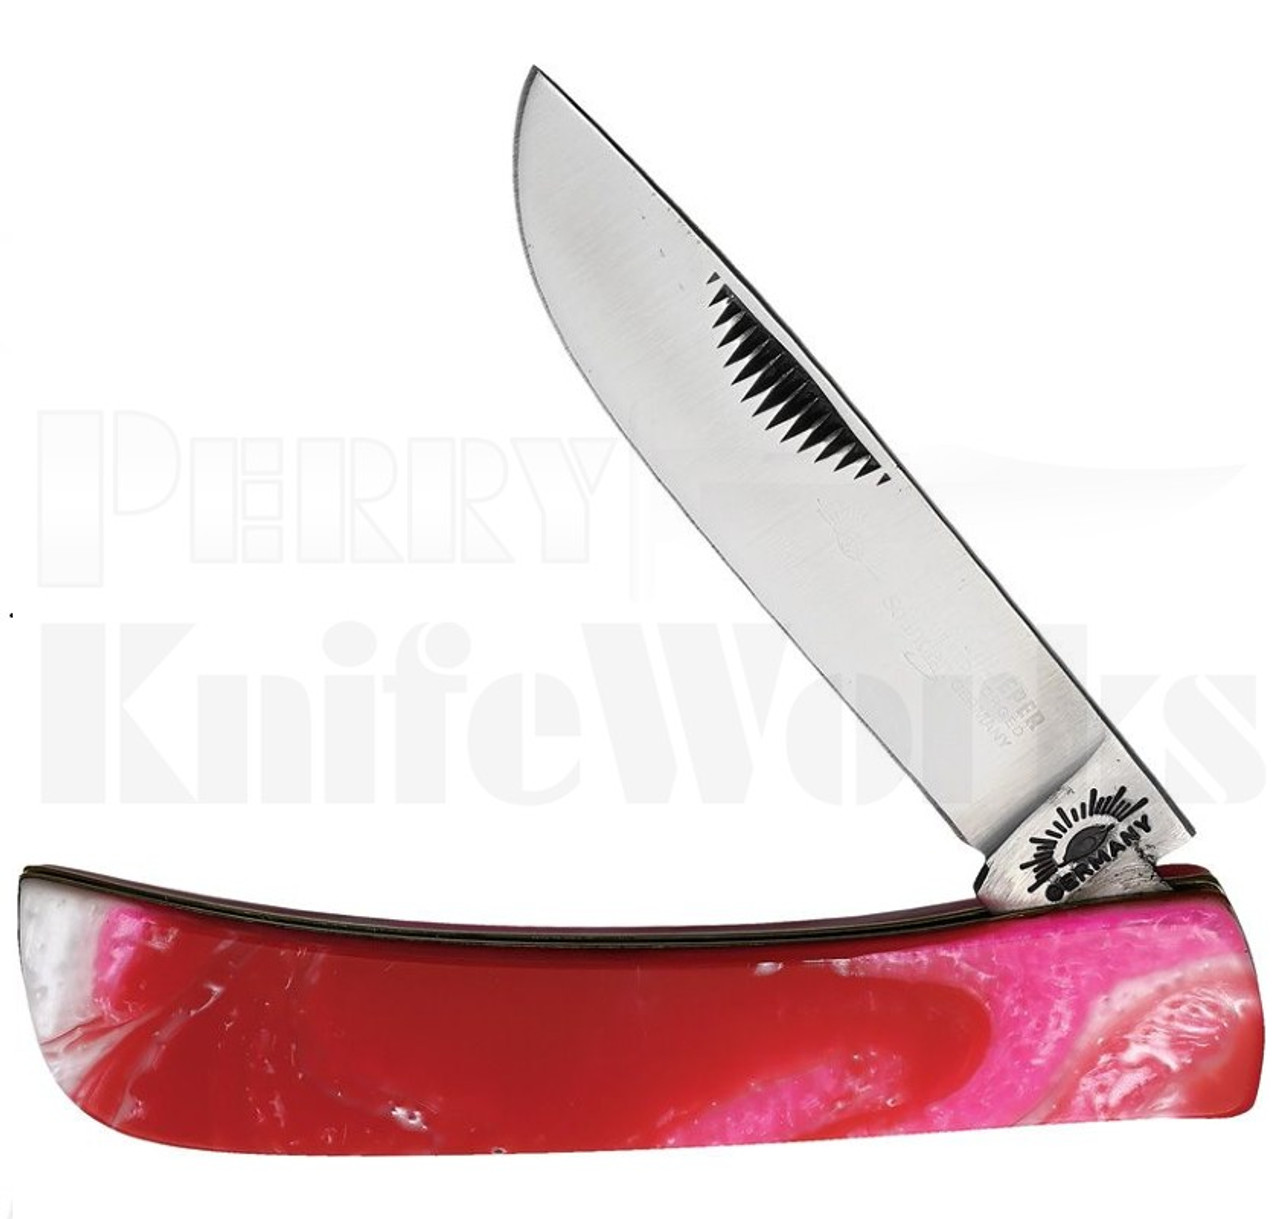 German Eye Brand Limited Clodbuster Jr Slip Joint Knife Red Wave